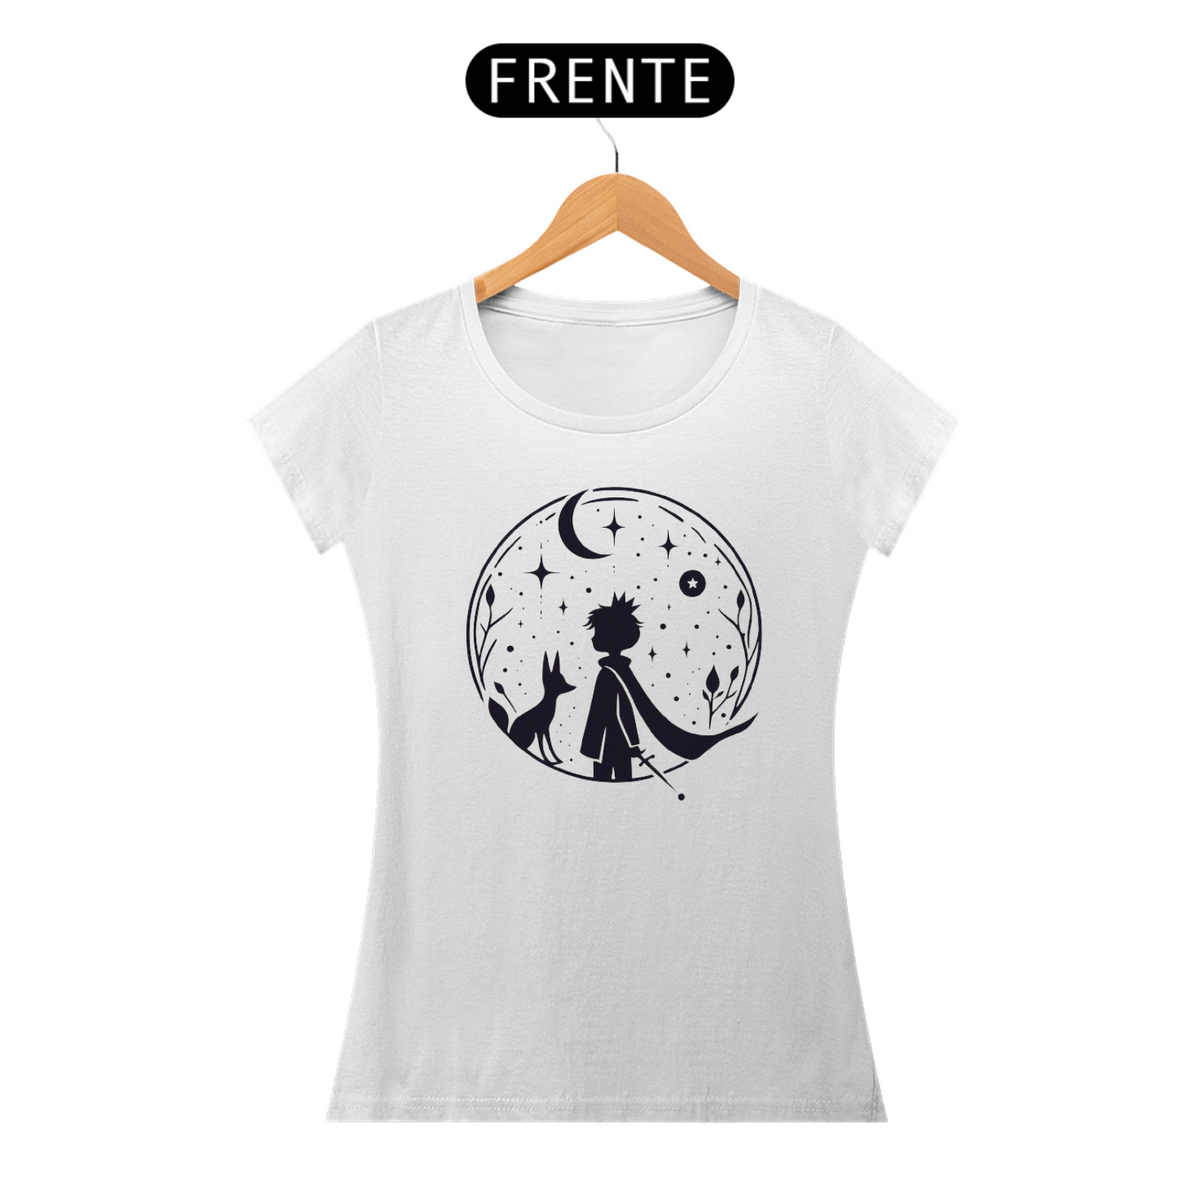 Nome do produto: Camiseta Feminina Pequeno Príncipe Dentro do Planeta